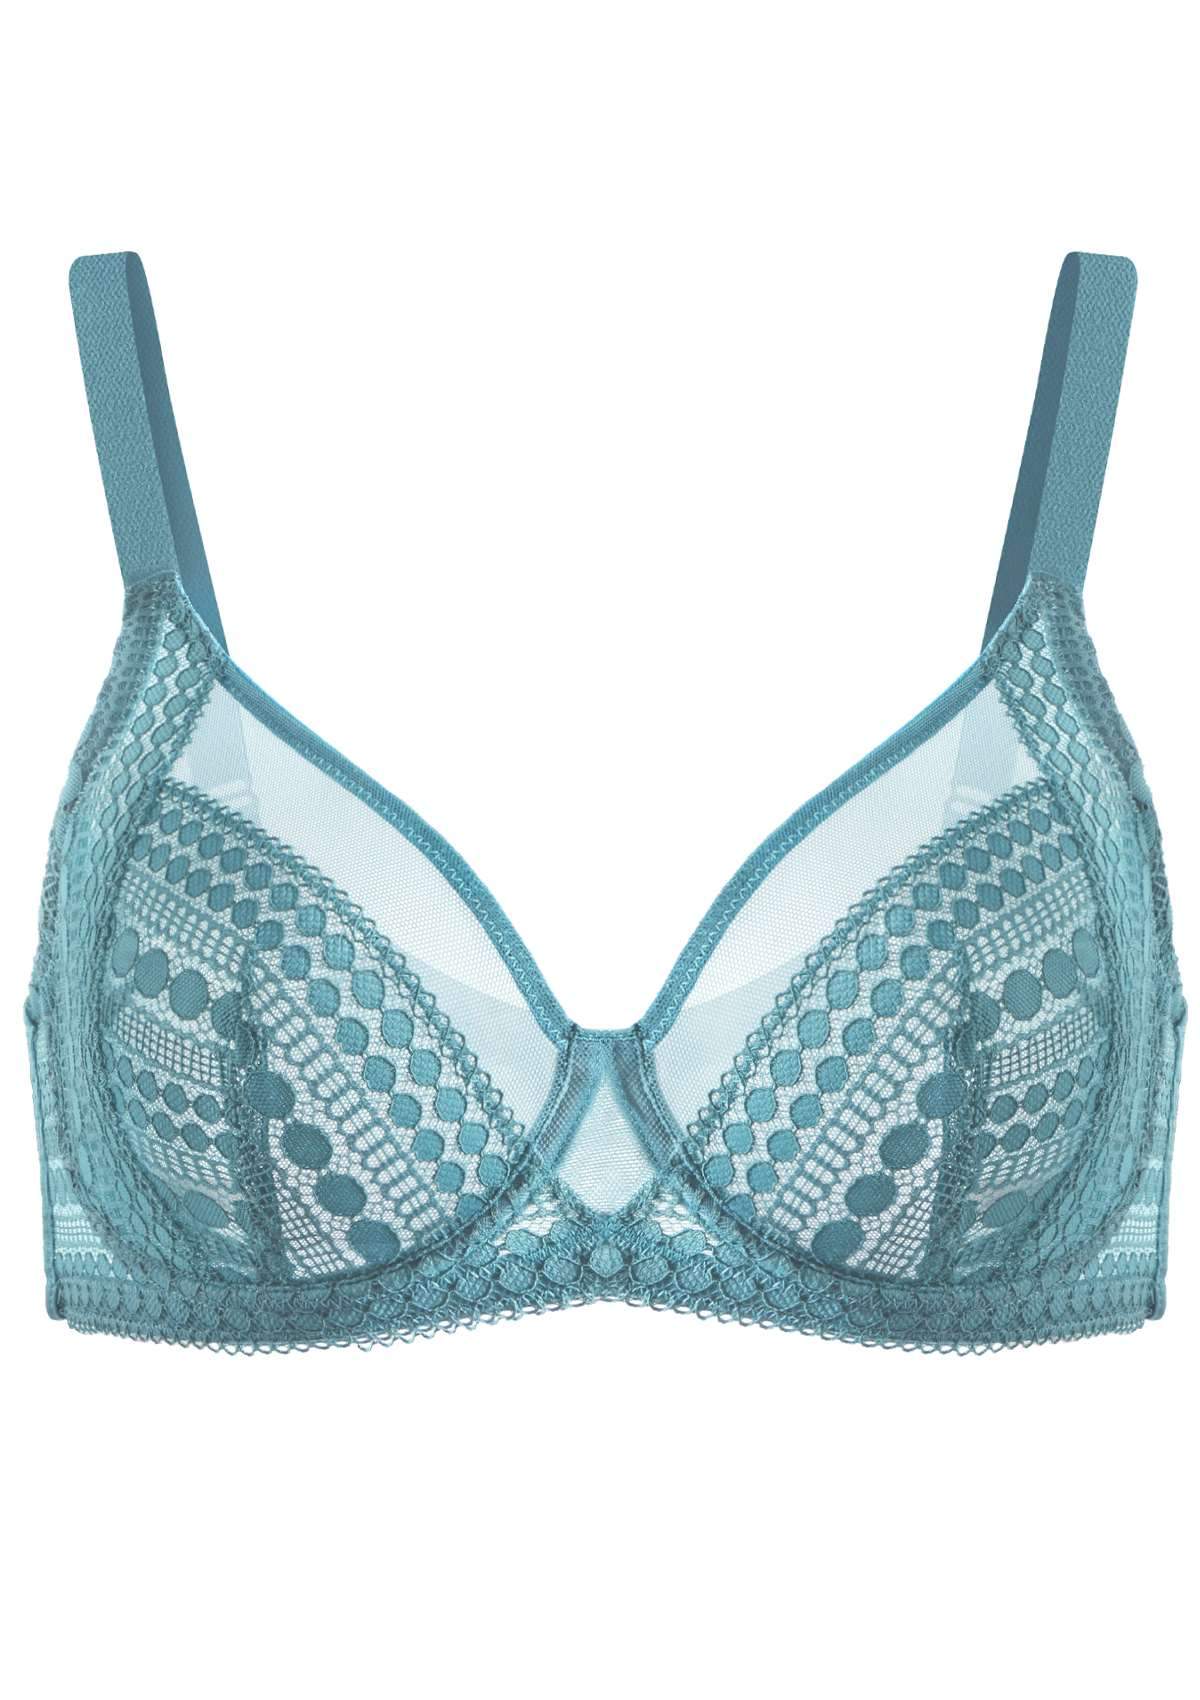 HSIA Heroine Matching Bra And Underwear Set: Bra For Big Boobs - Brittany Blue / 34 / DDD/F